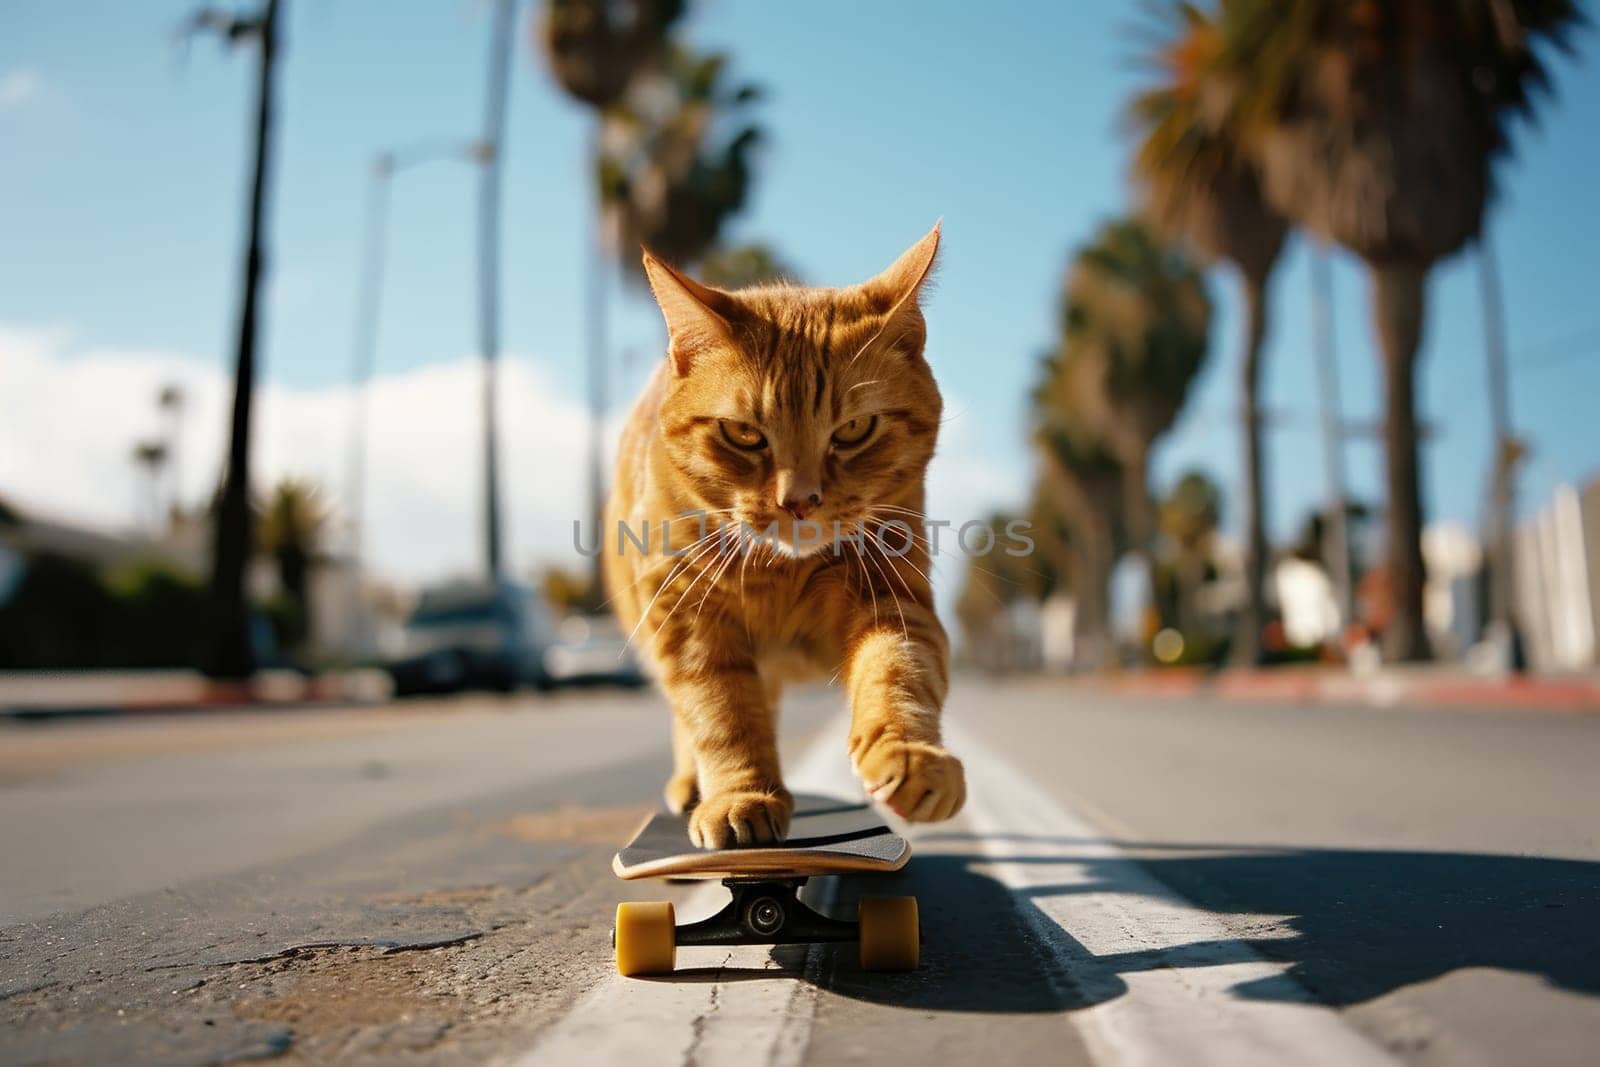 Skateboarding cat. Funny cat rides skateboard on the street in summer city.